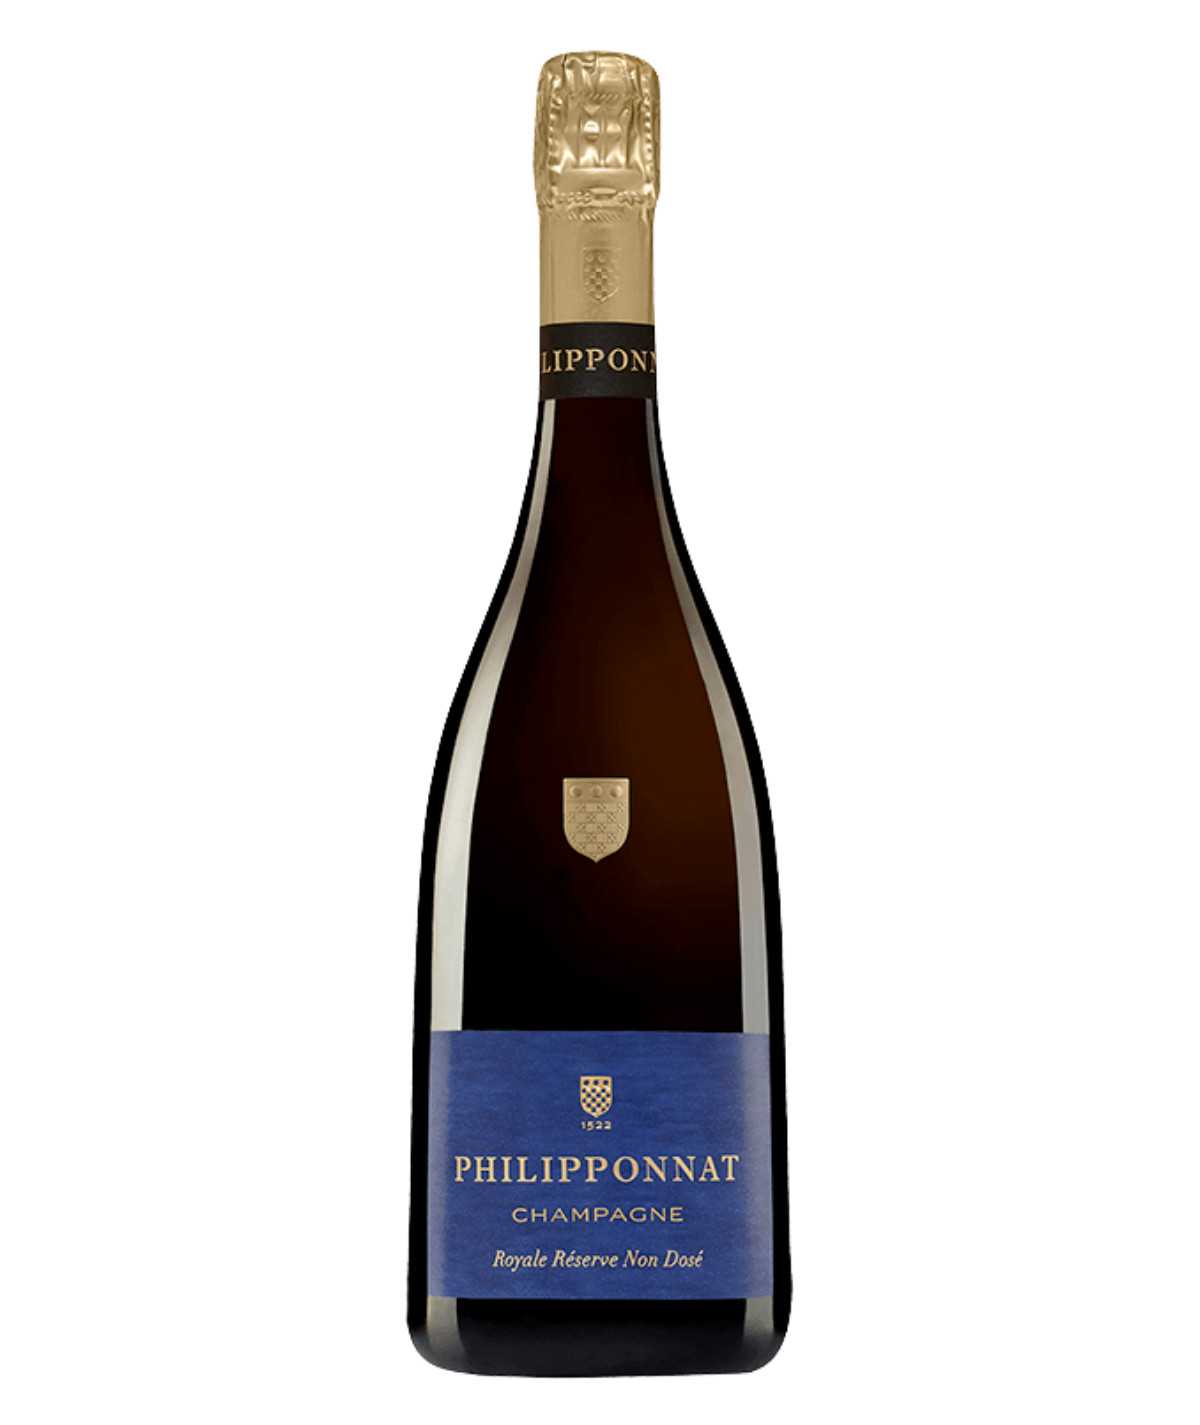 Bottle of Philipponnat's Royale Réserve Non Dosée Champagne, a symbol of elegance and Champagne tradition.